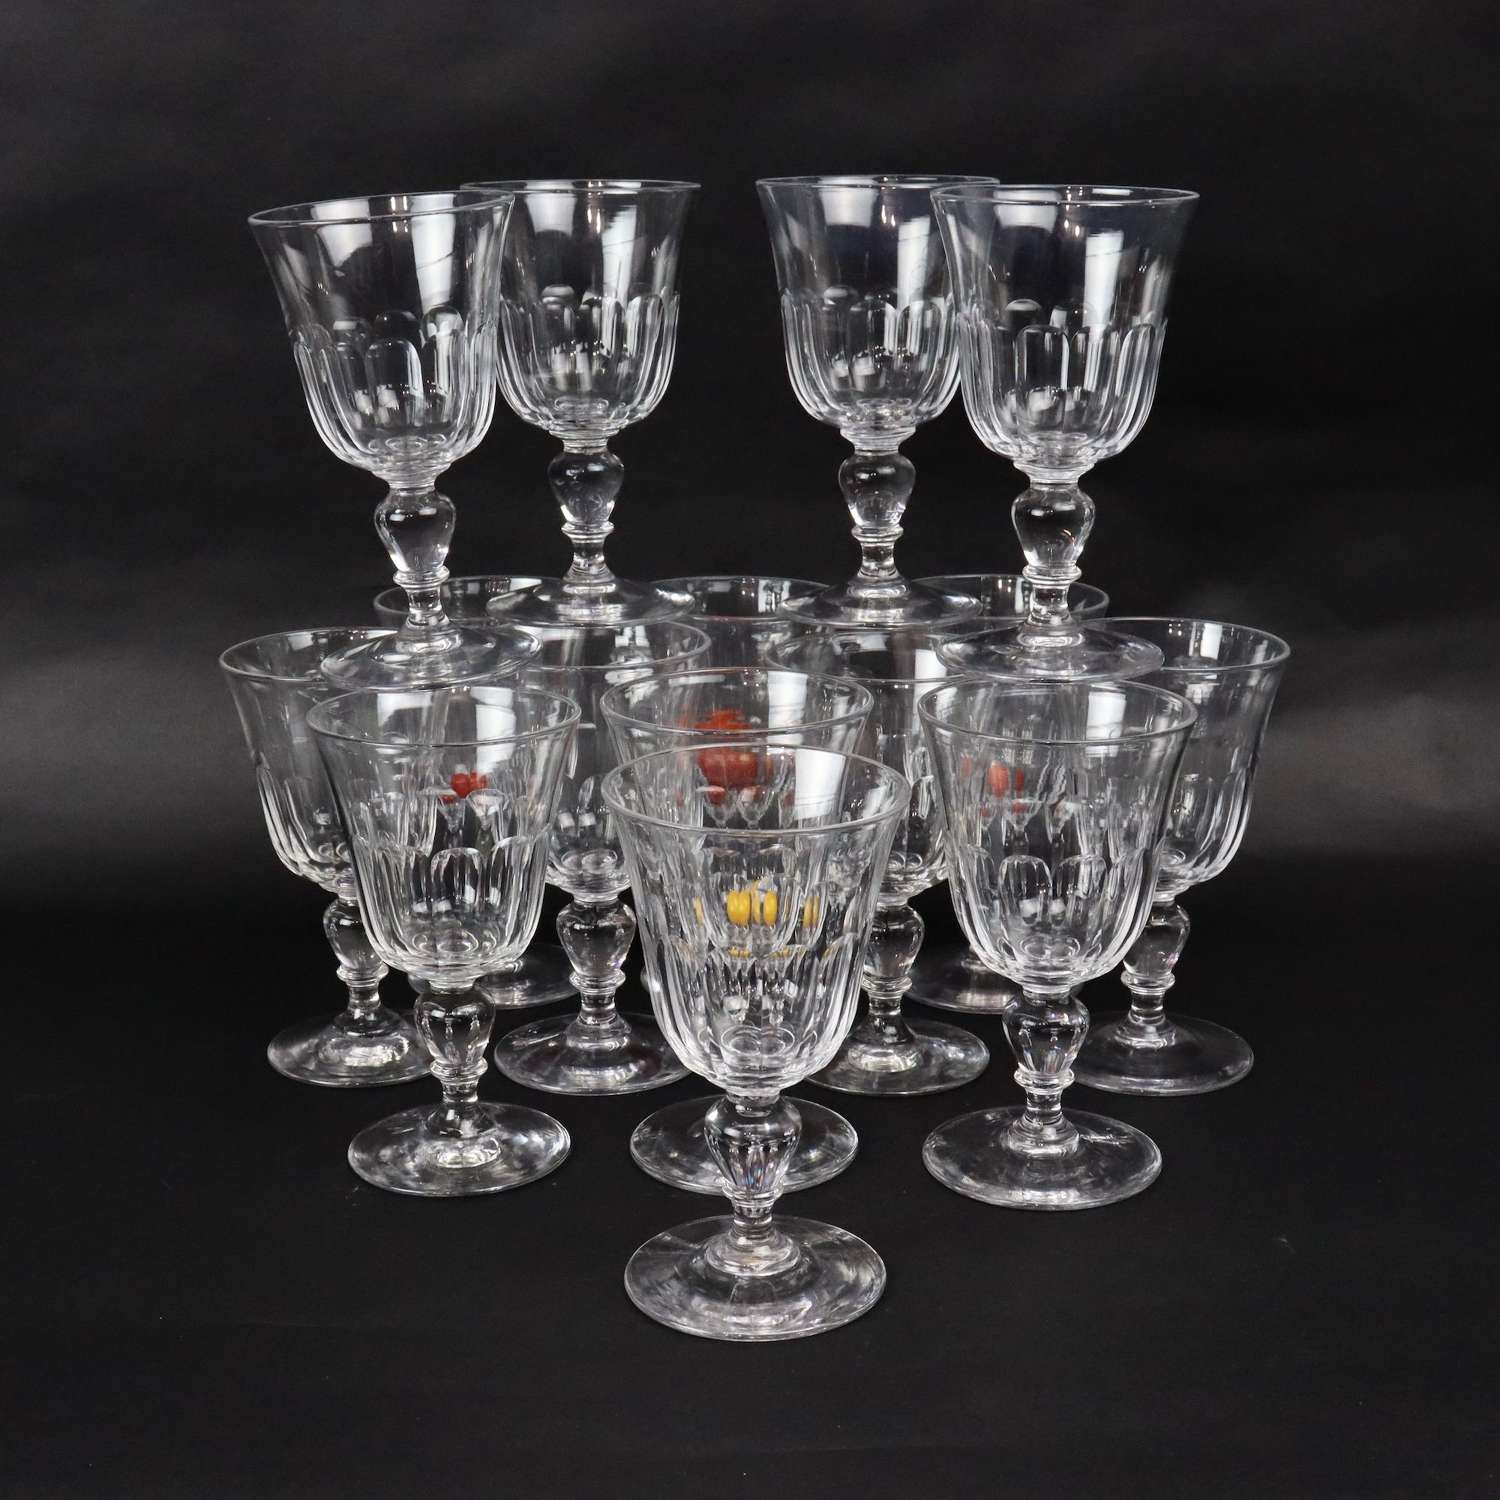 Baccarat crystal wine glasses